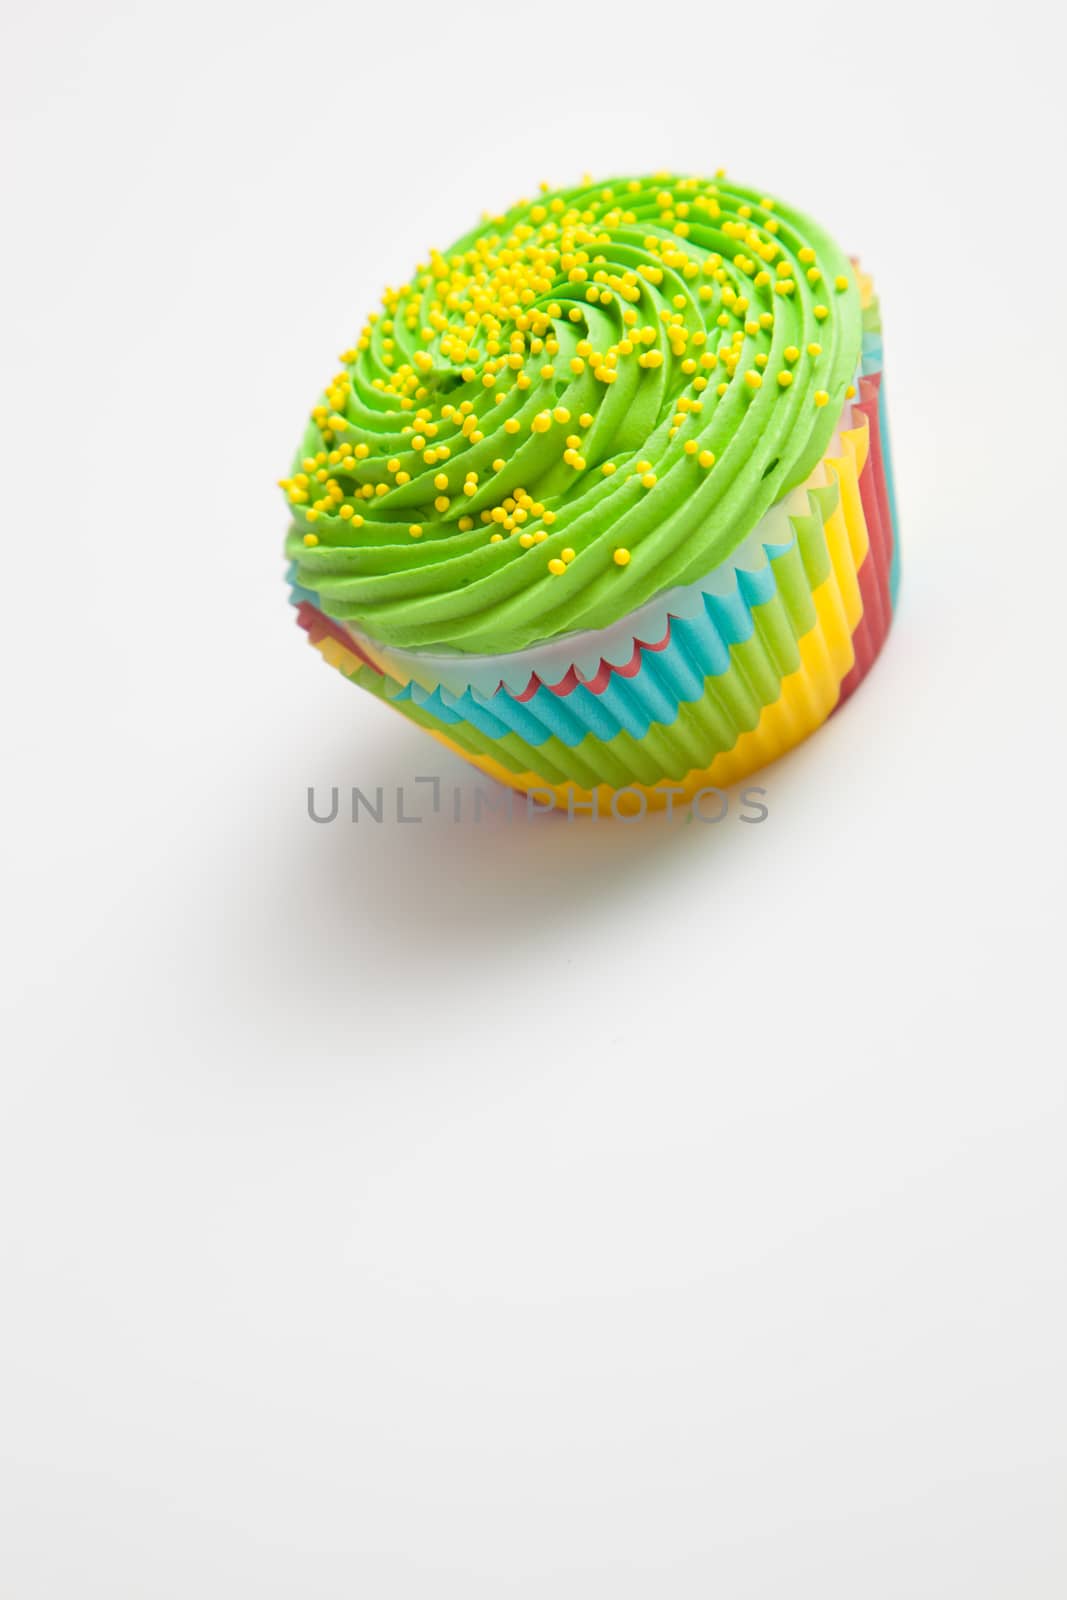 Closeup of a colorful cupcake by Izaphoto